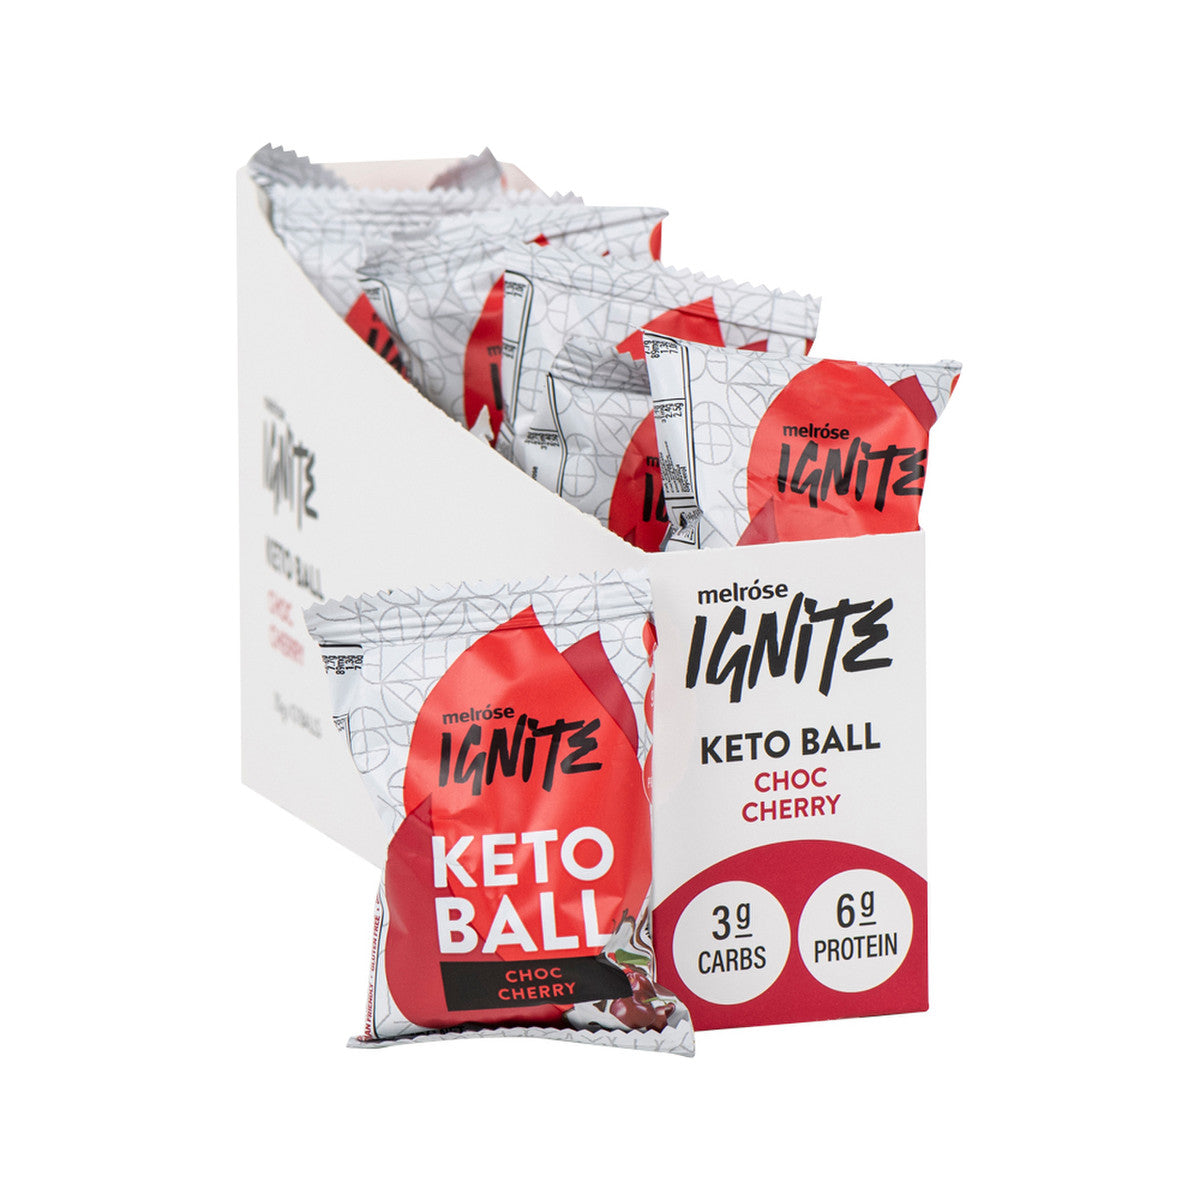 Melrose Ignite Keto Ball Choc Cherry 35g x 12